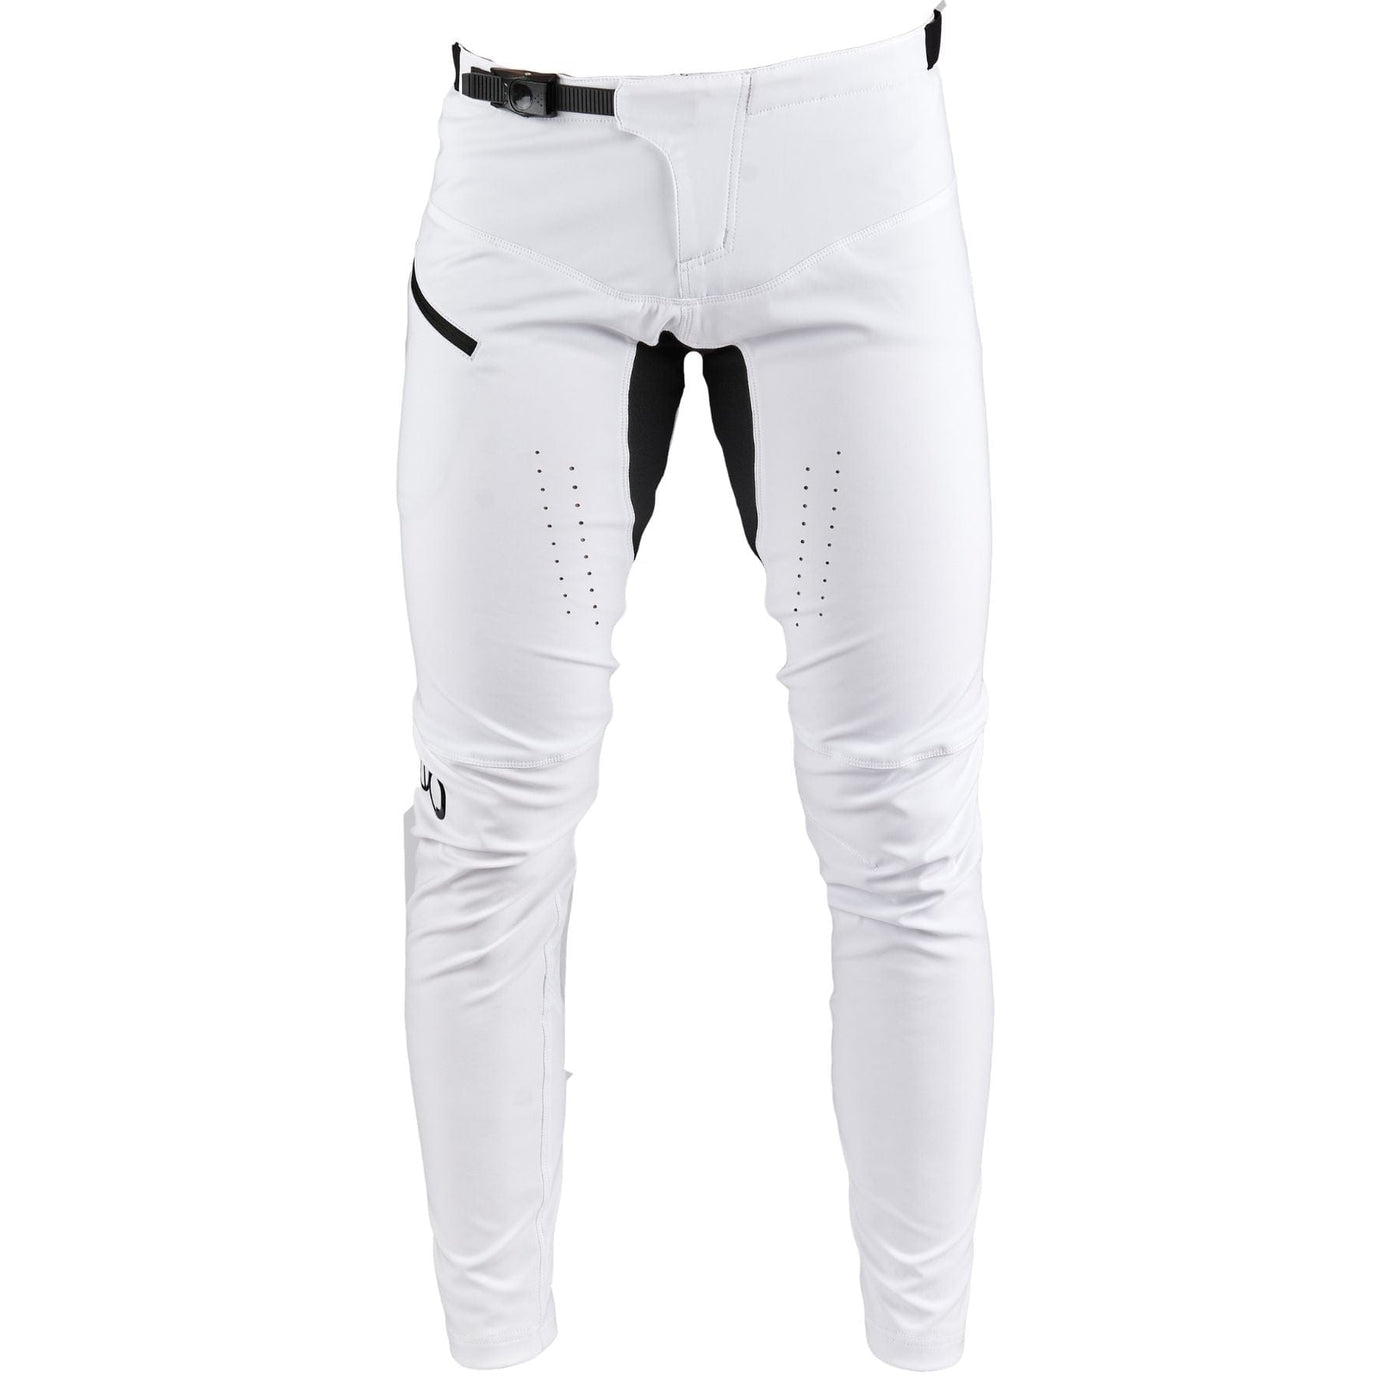 NoLogo Racer BMX Pants - White 8Lines Shop - Fast Shipping